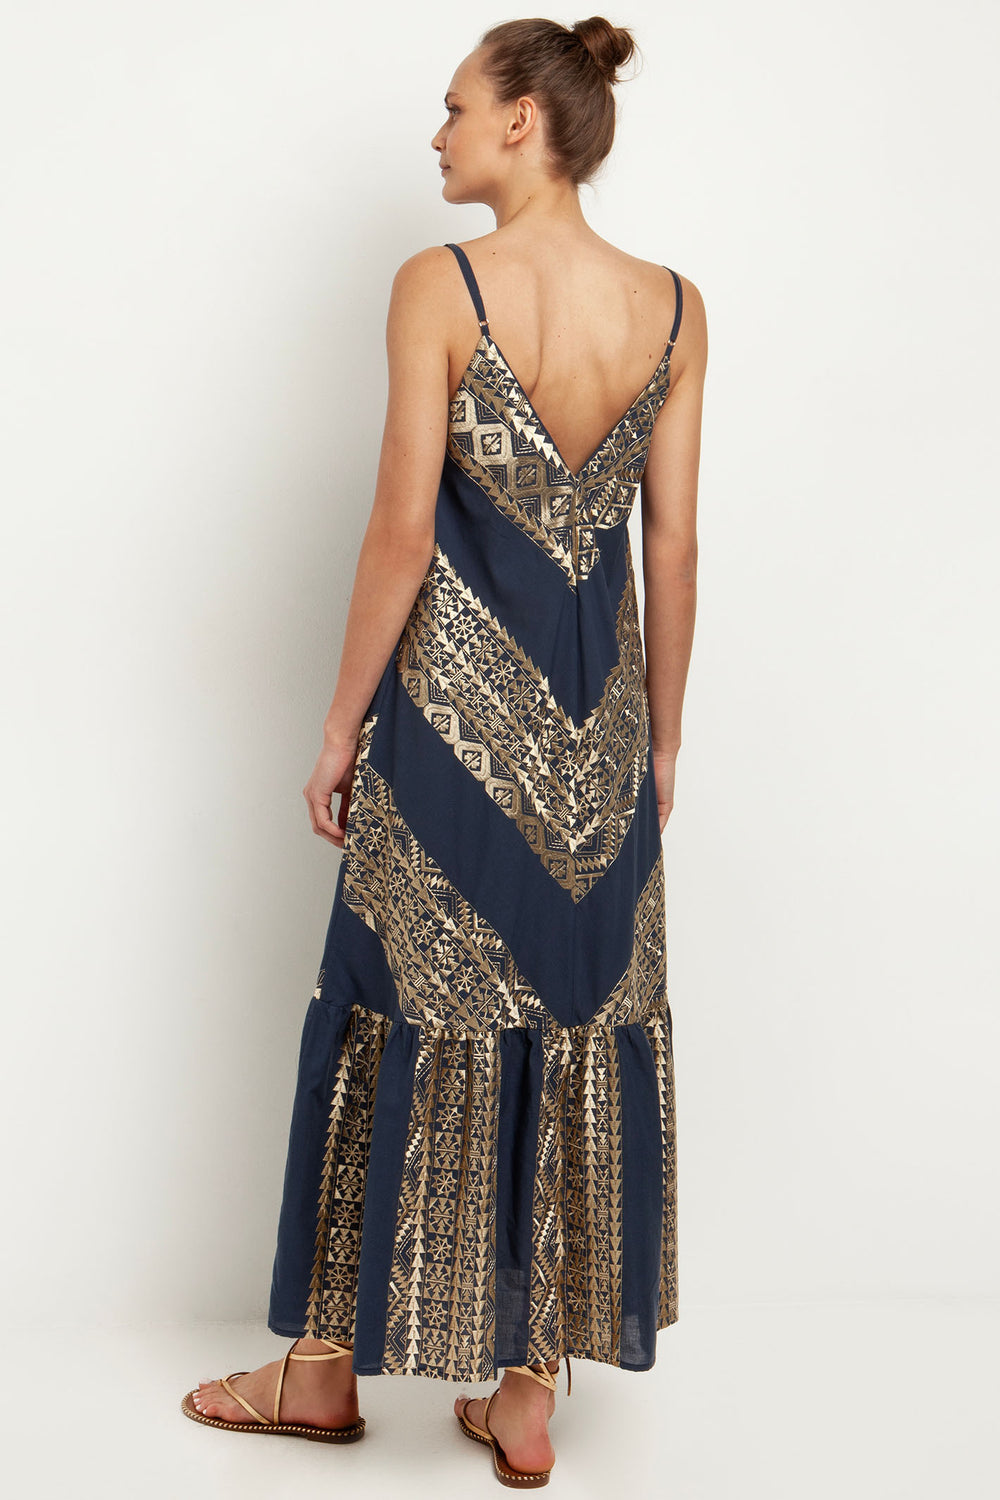 Greek Archaic Kori 330262 Navy Gold Embroidered Cotton Strap Dress - Olivia Grace Fashion